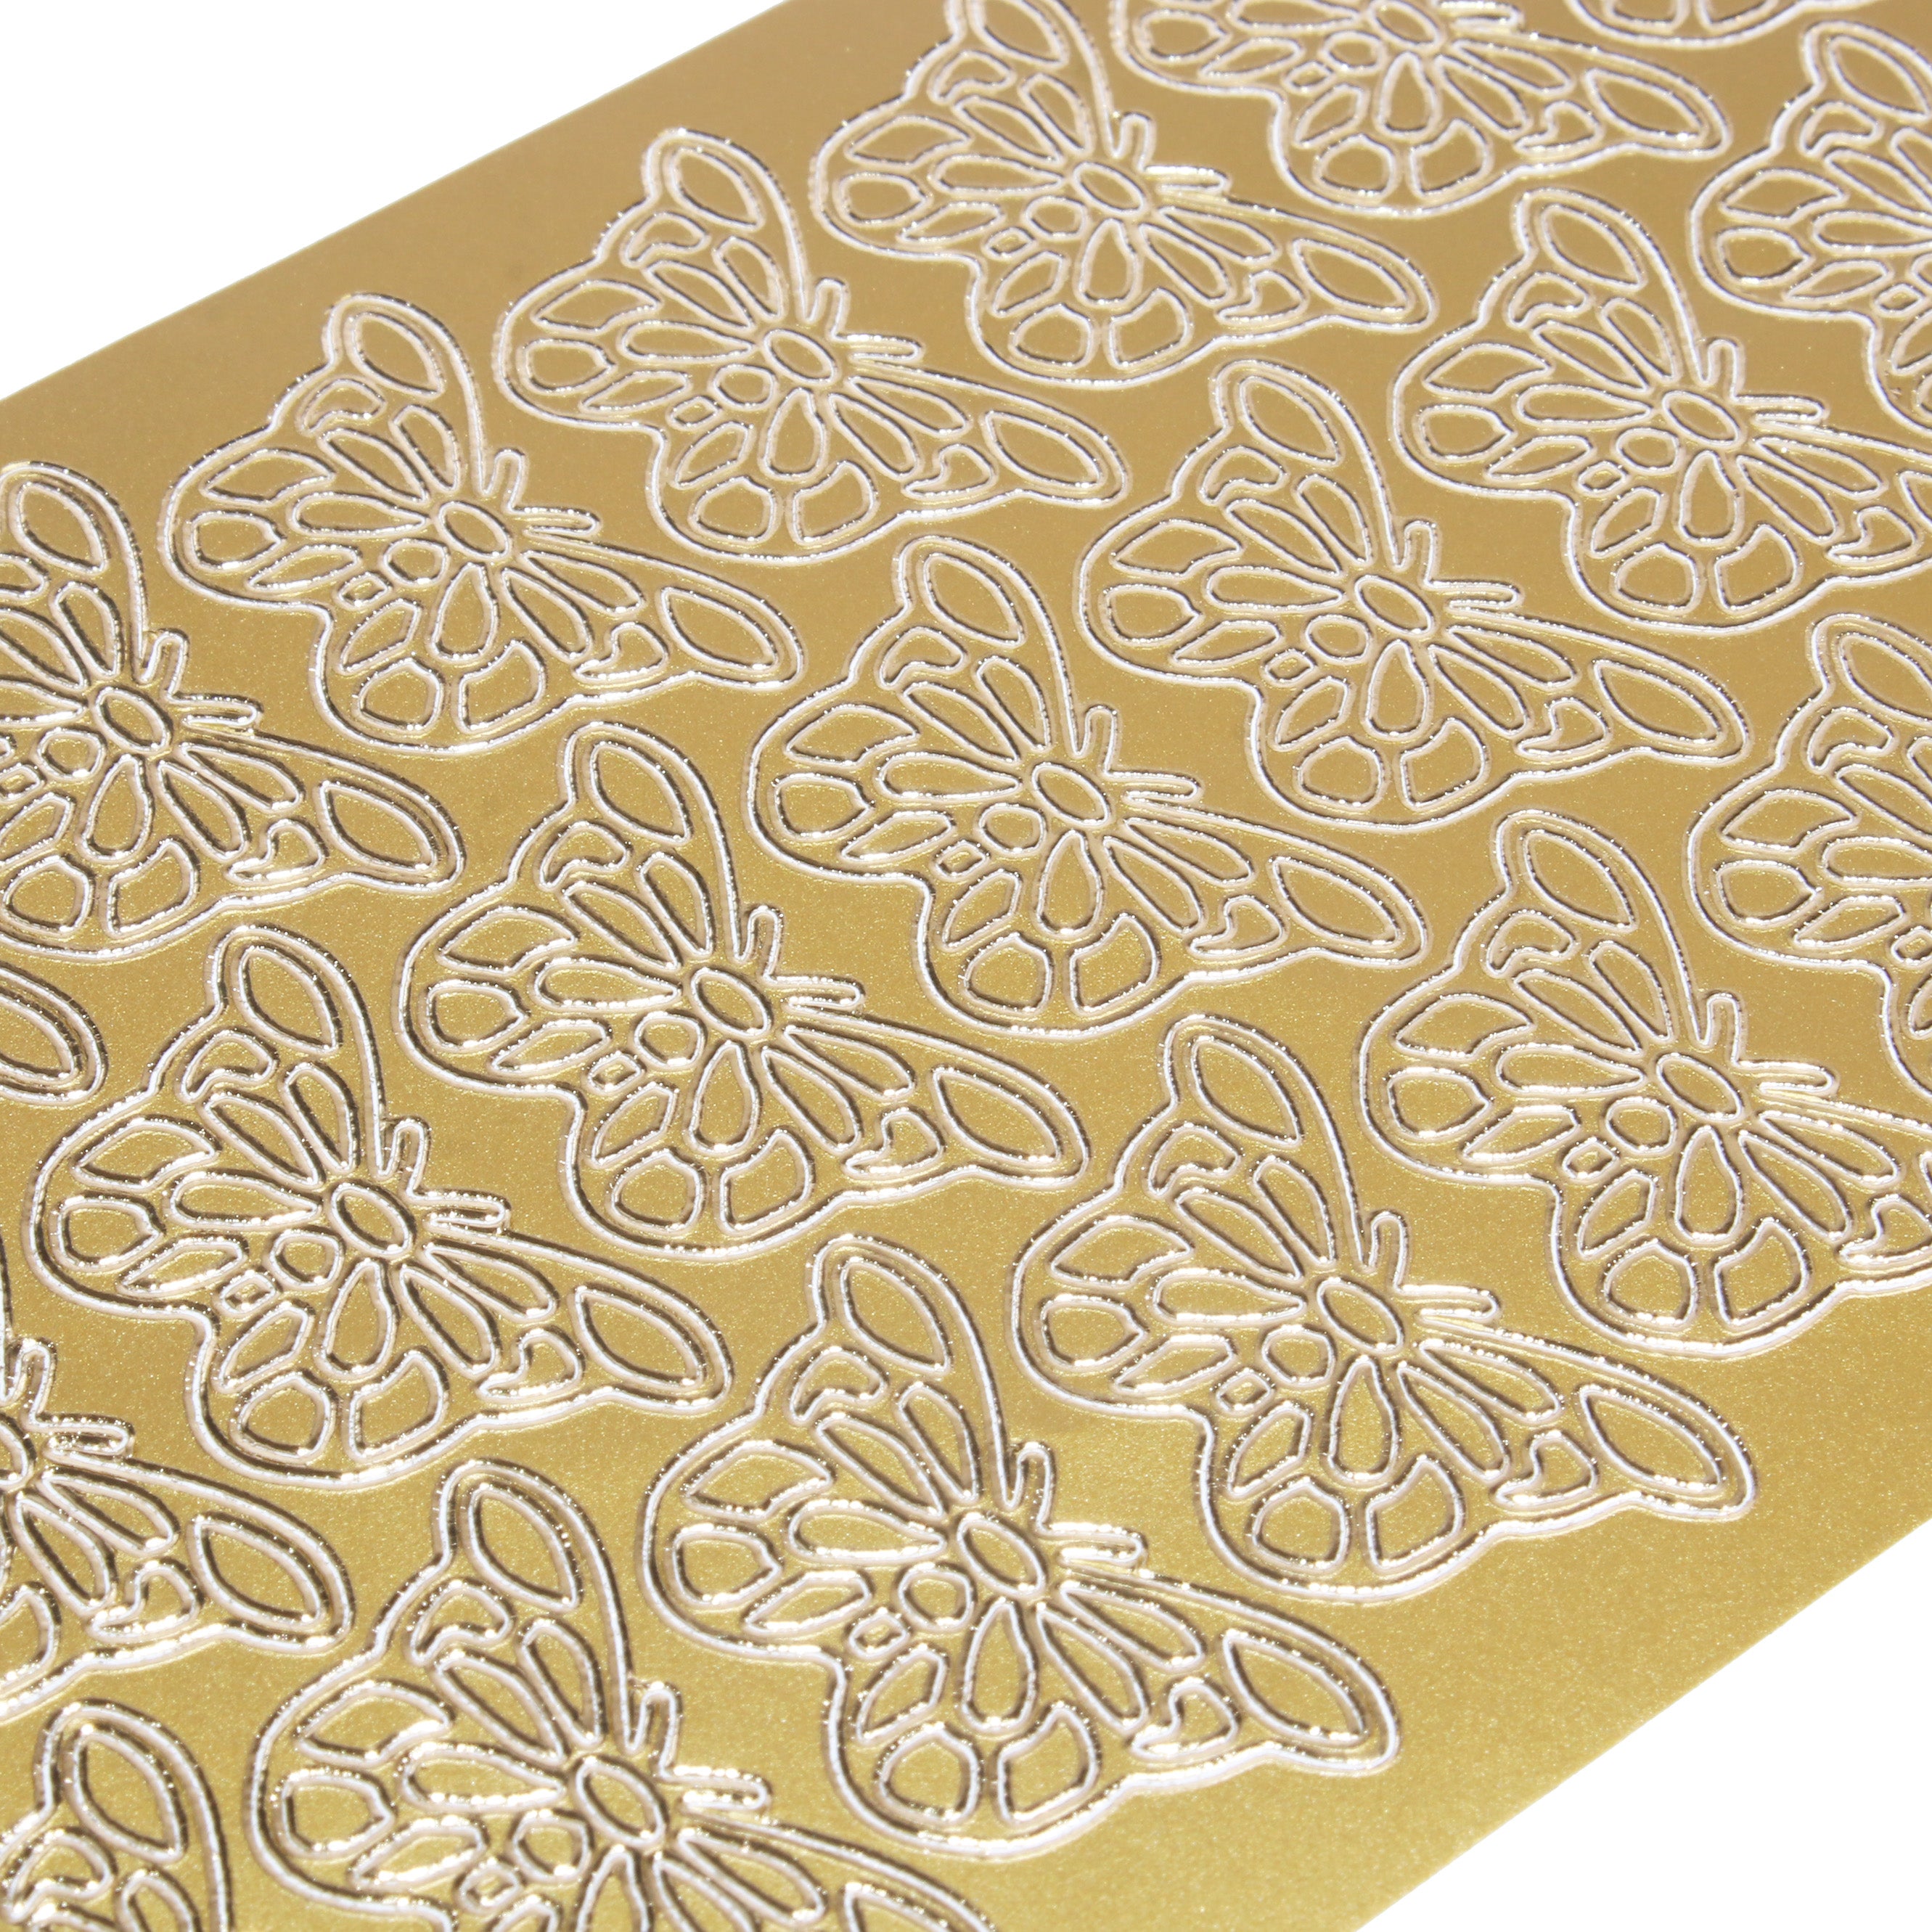 Foil Peel Off Sticker Golden Butterfly 10 X 23cm 1Sheet